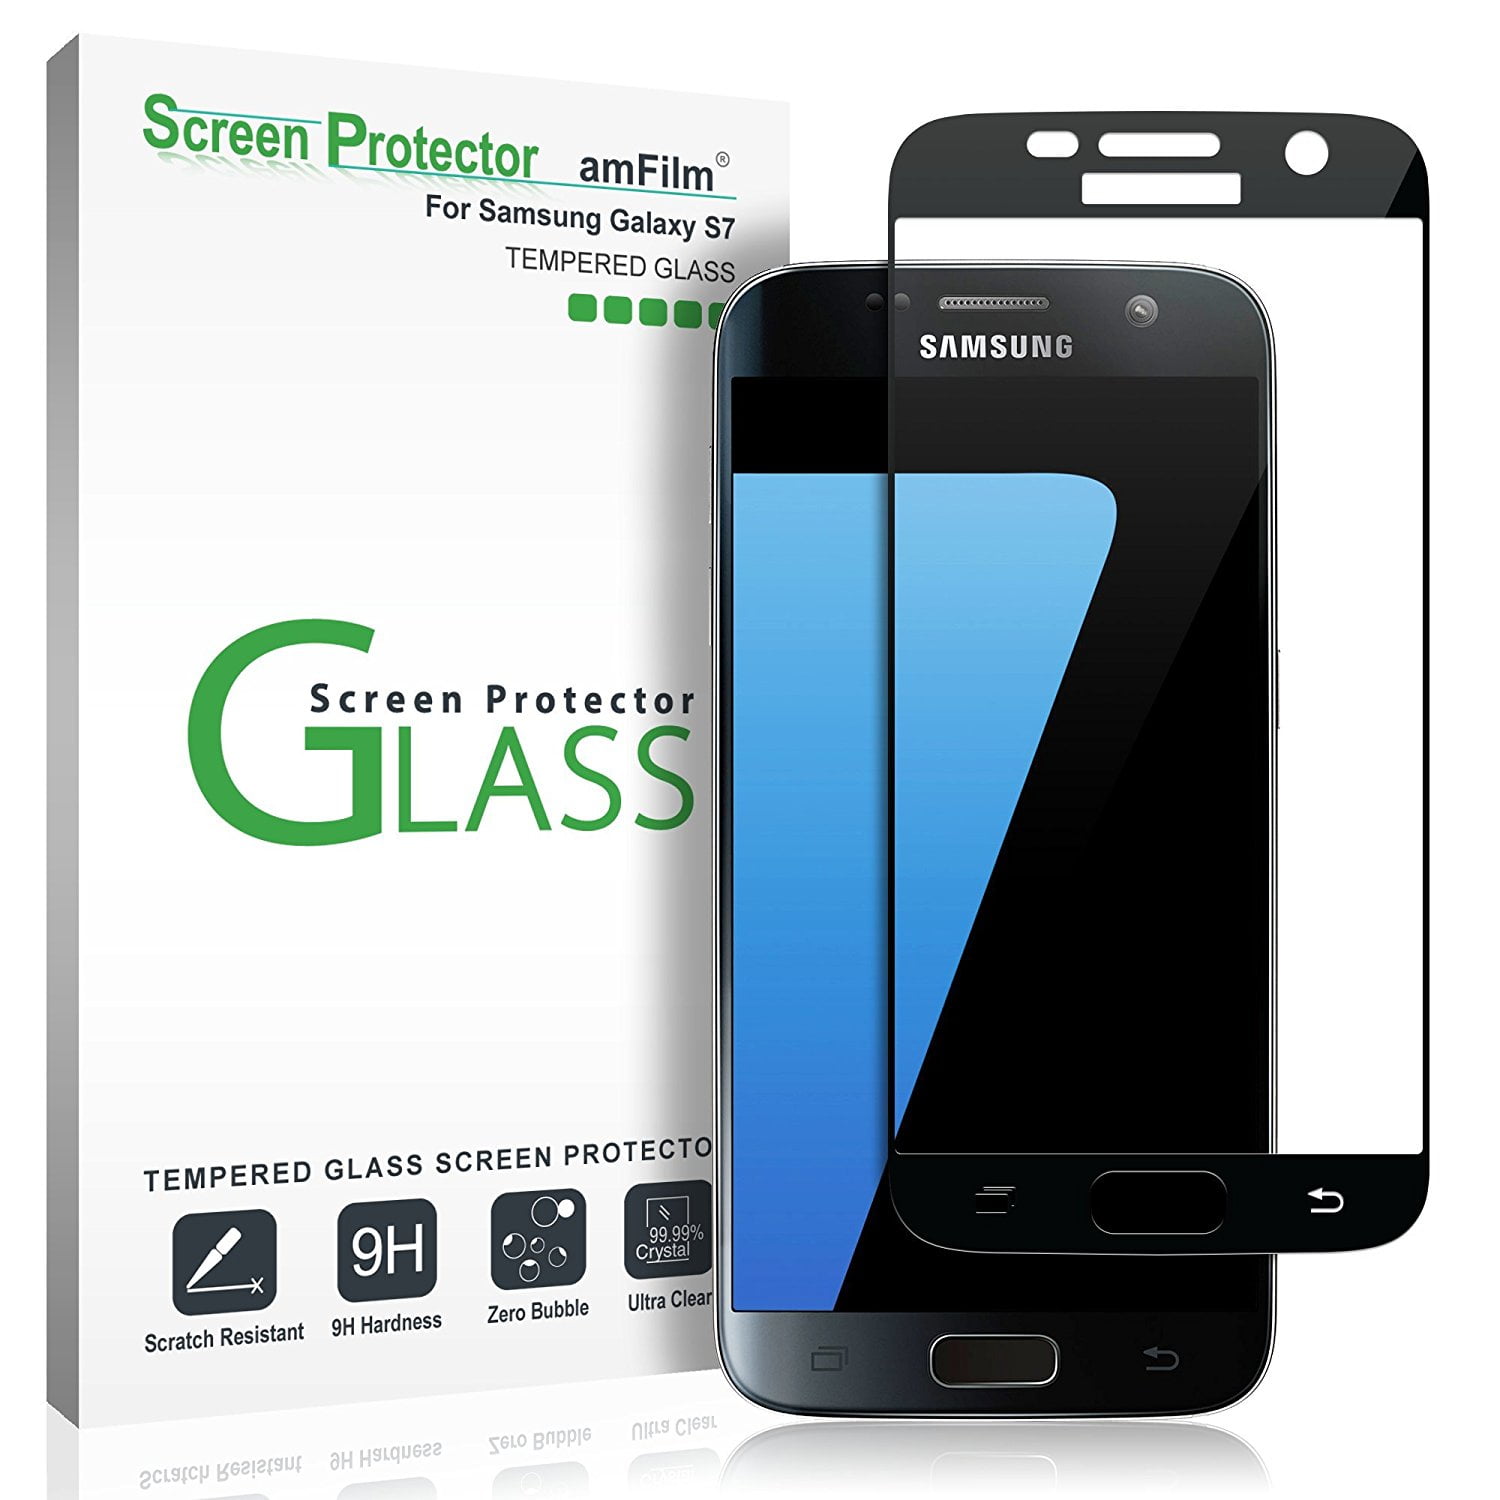 instinct Geaccepteerd hurken Samsung Galaxy S7 amFilm Full Cover Tempered Glass Screen Protector (Black)  - Walmart.com